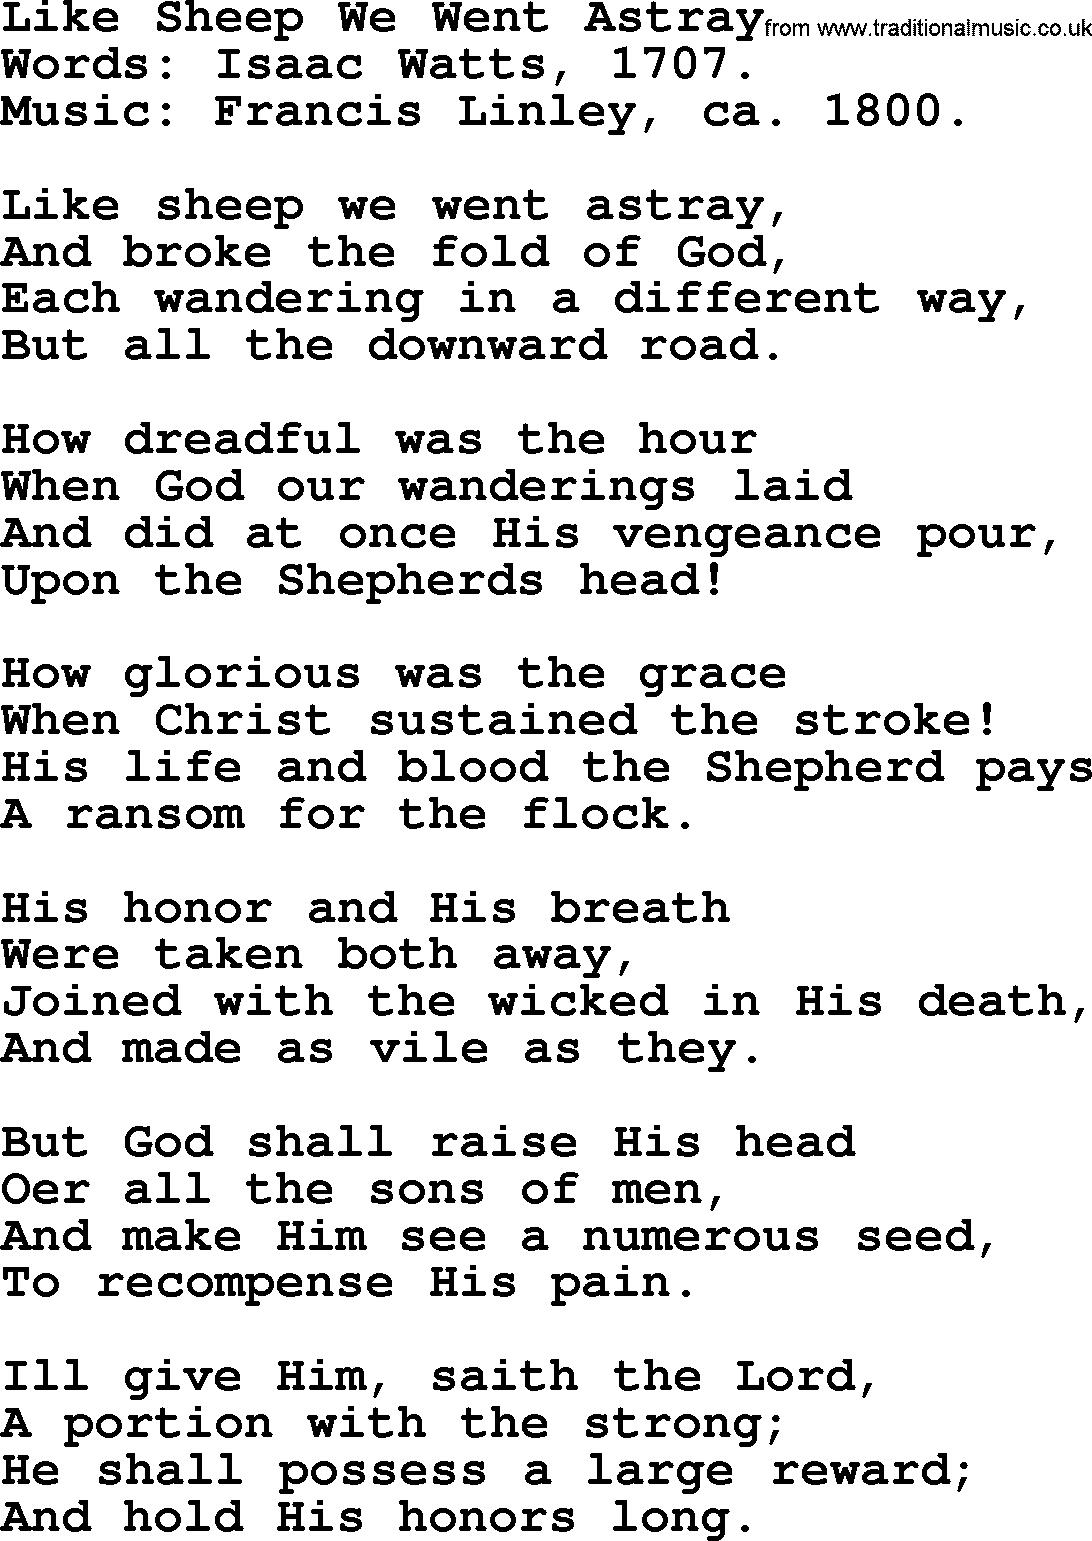 Isaac Watts Christian hymn: Like Sheep We Went Astray- lyricss